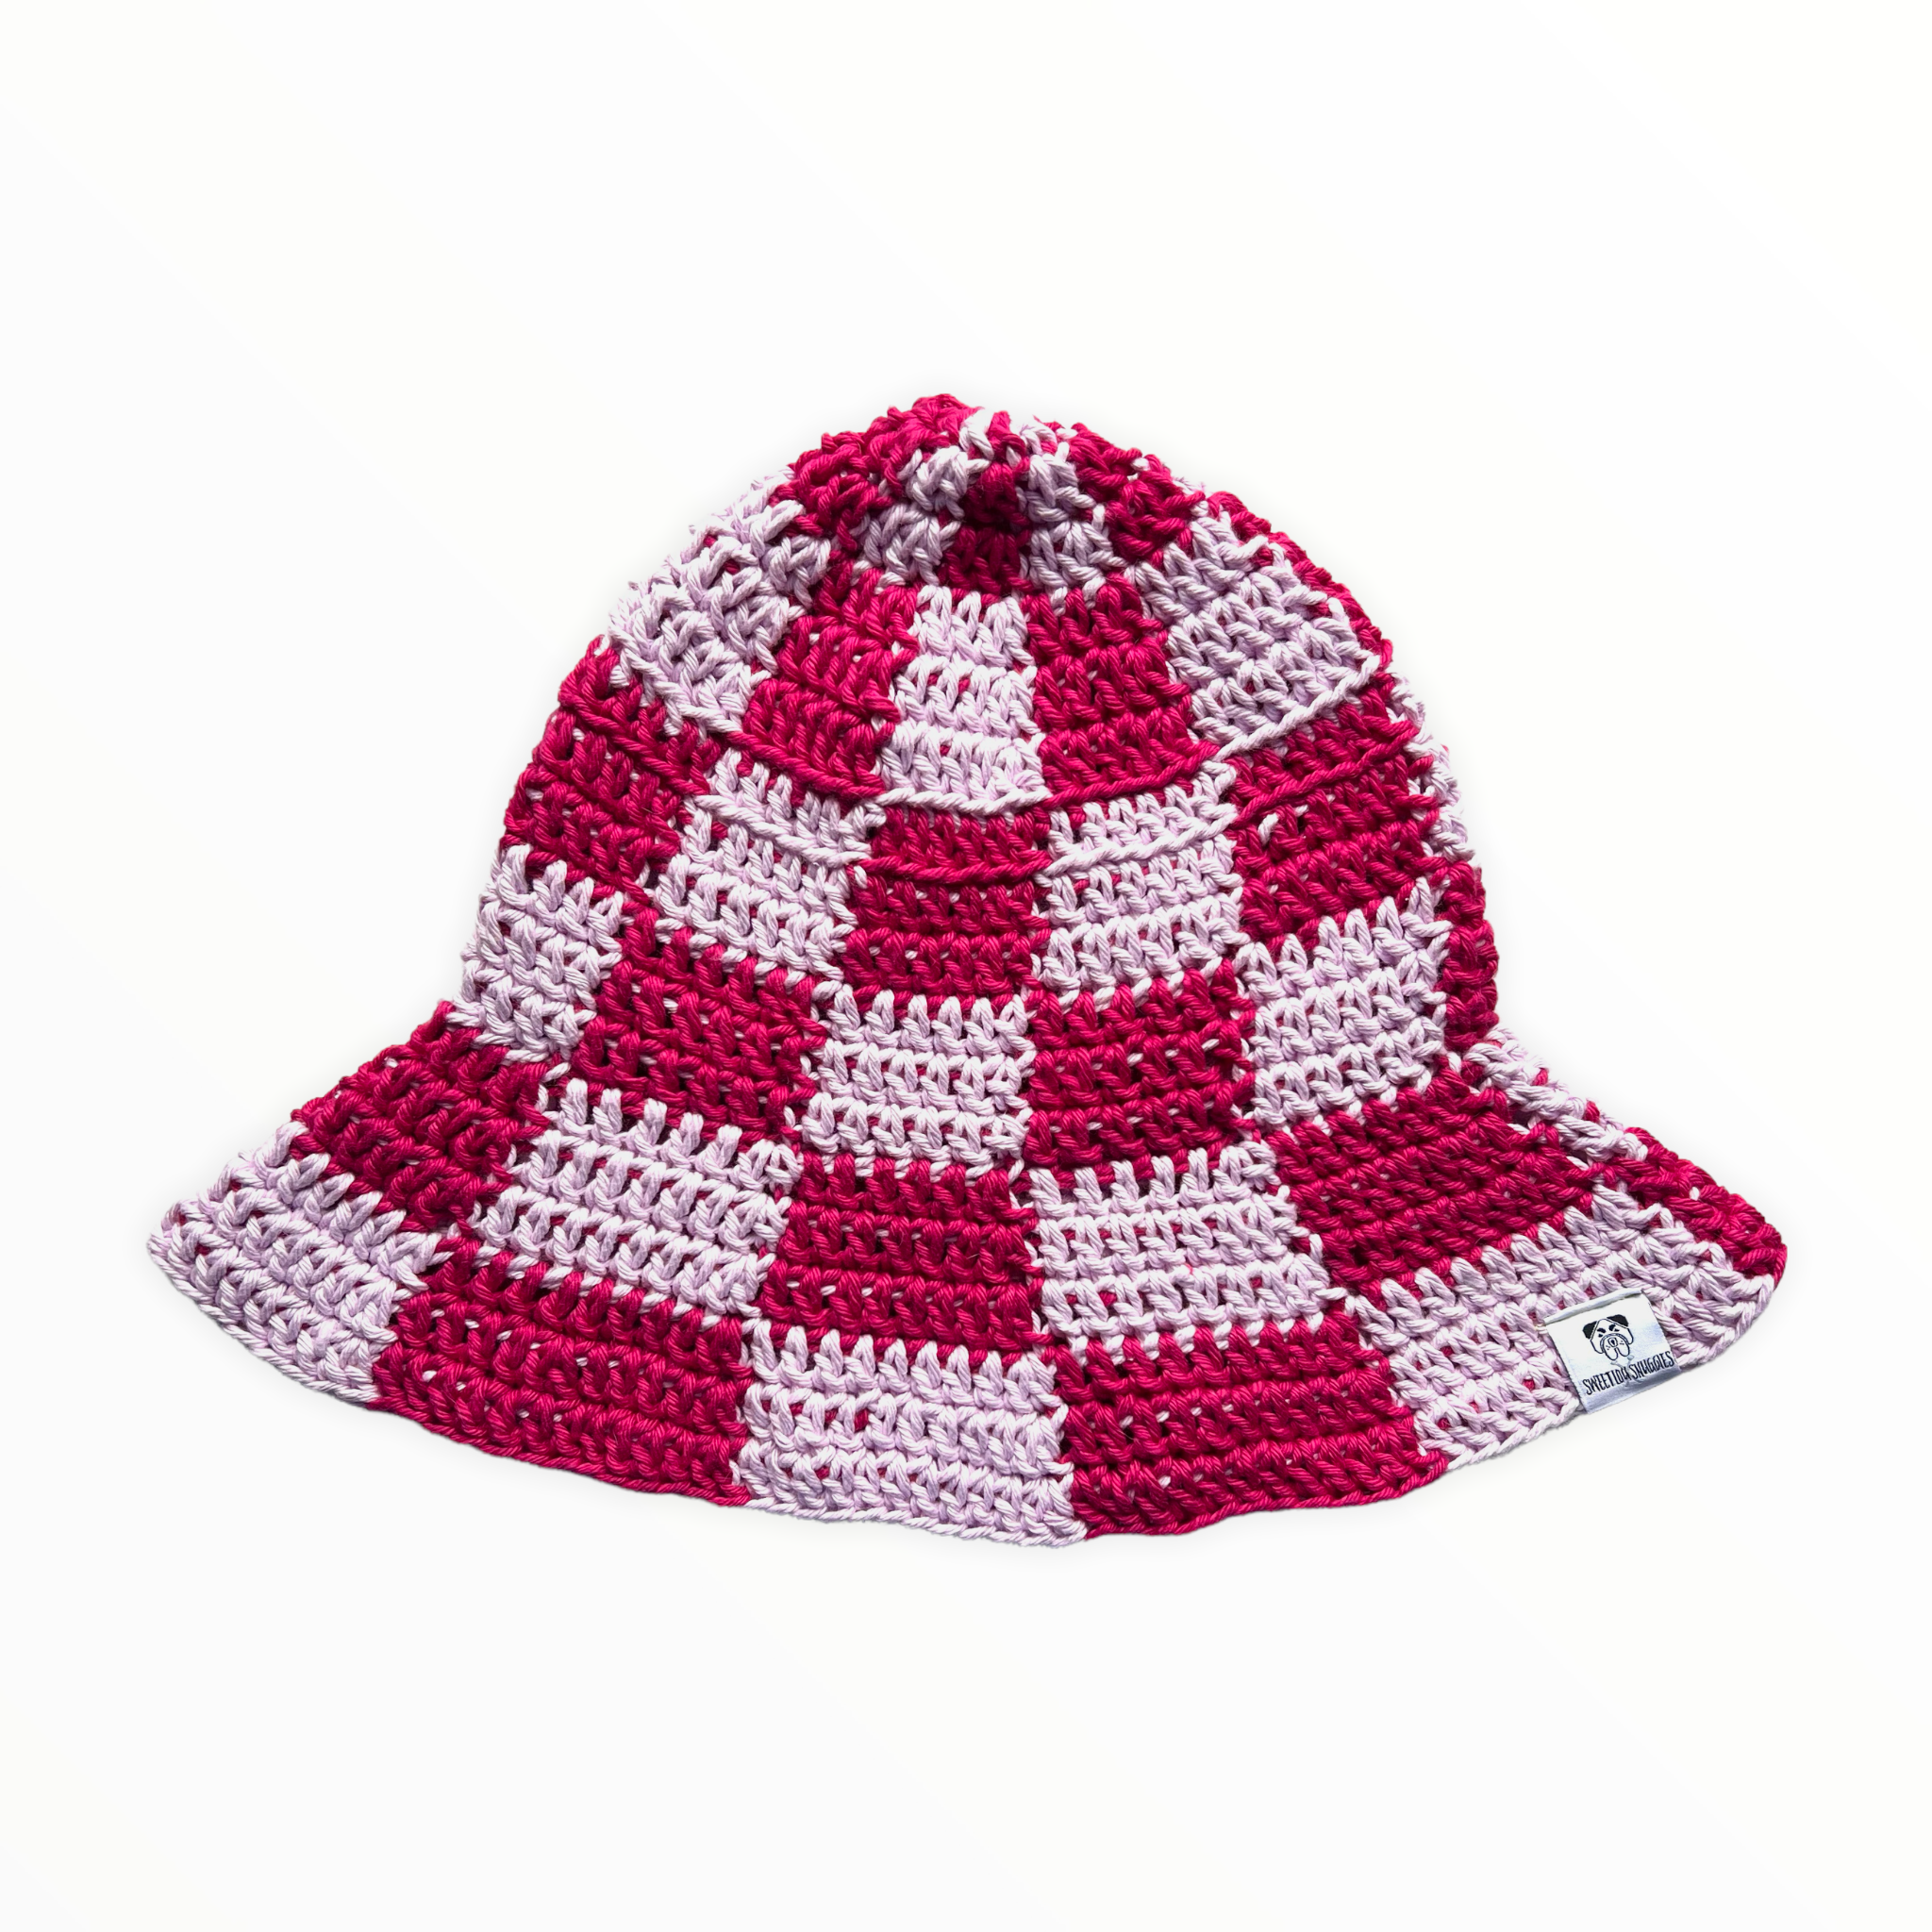 Checker Bucket Hat